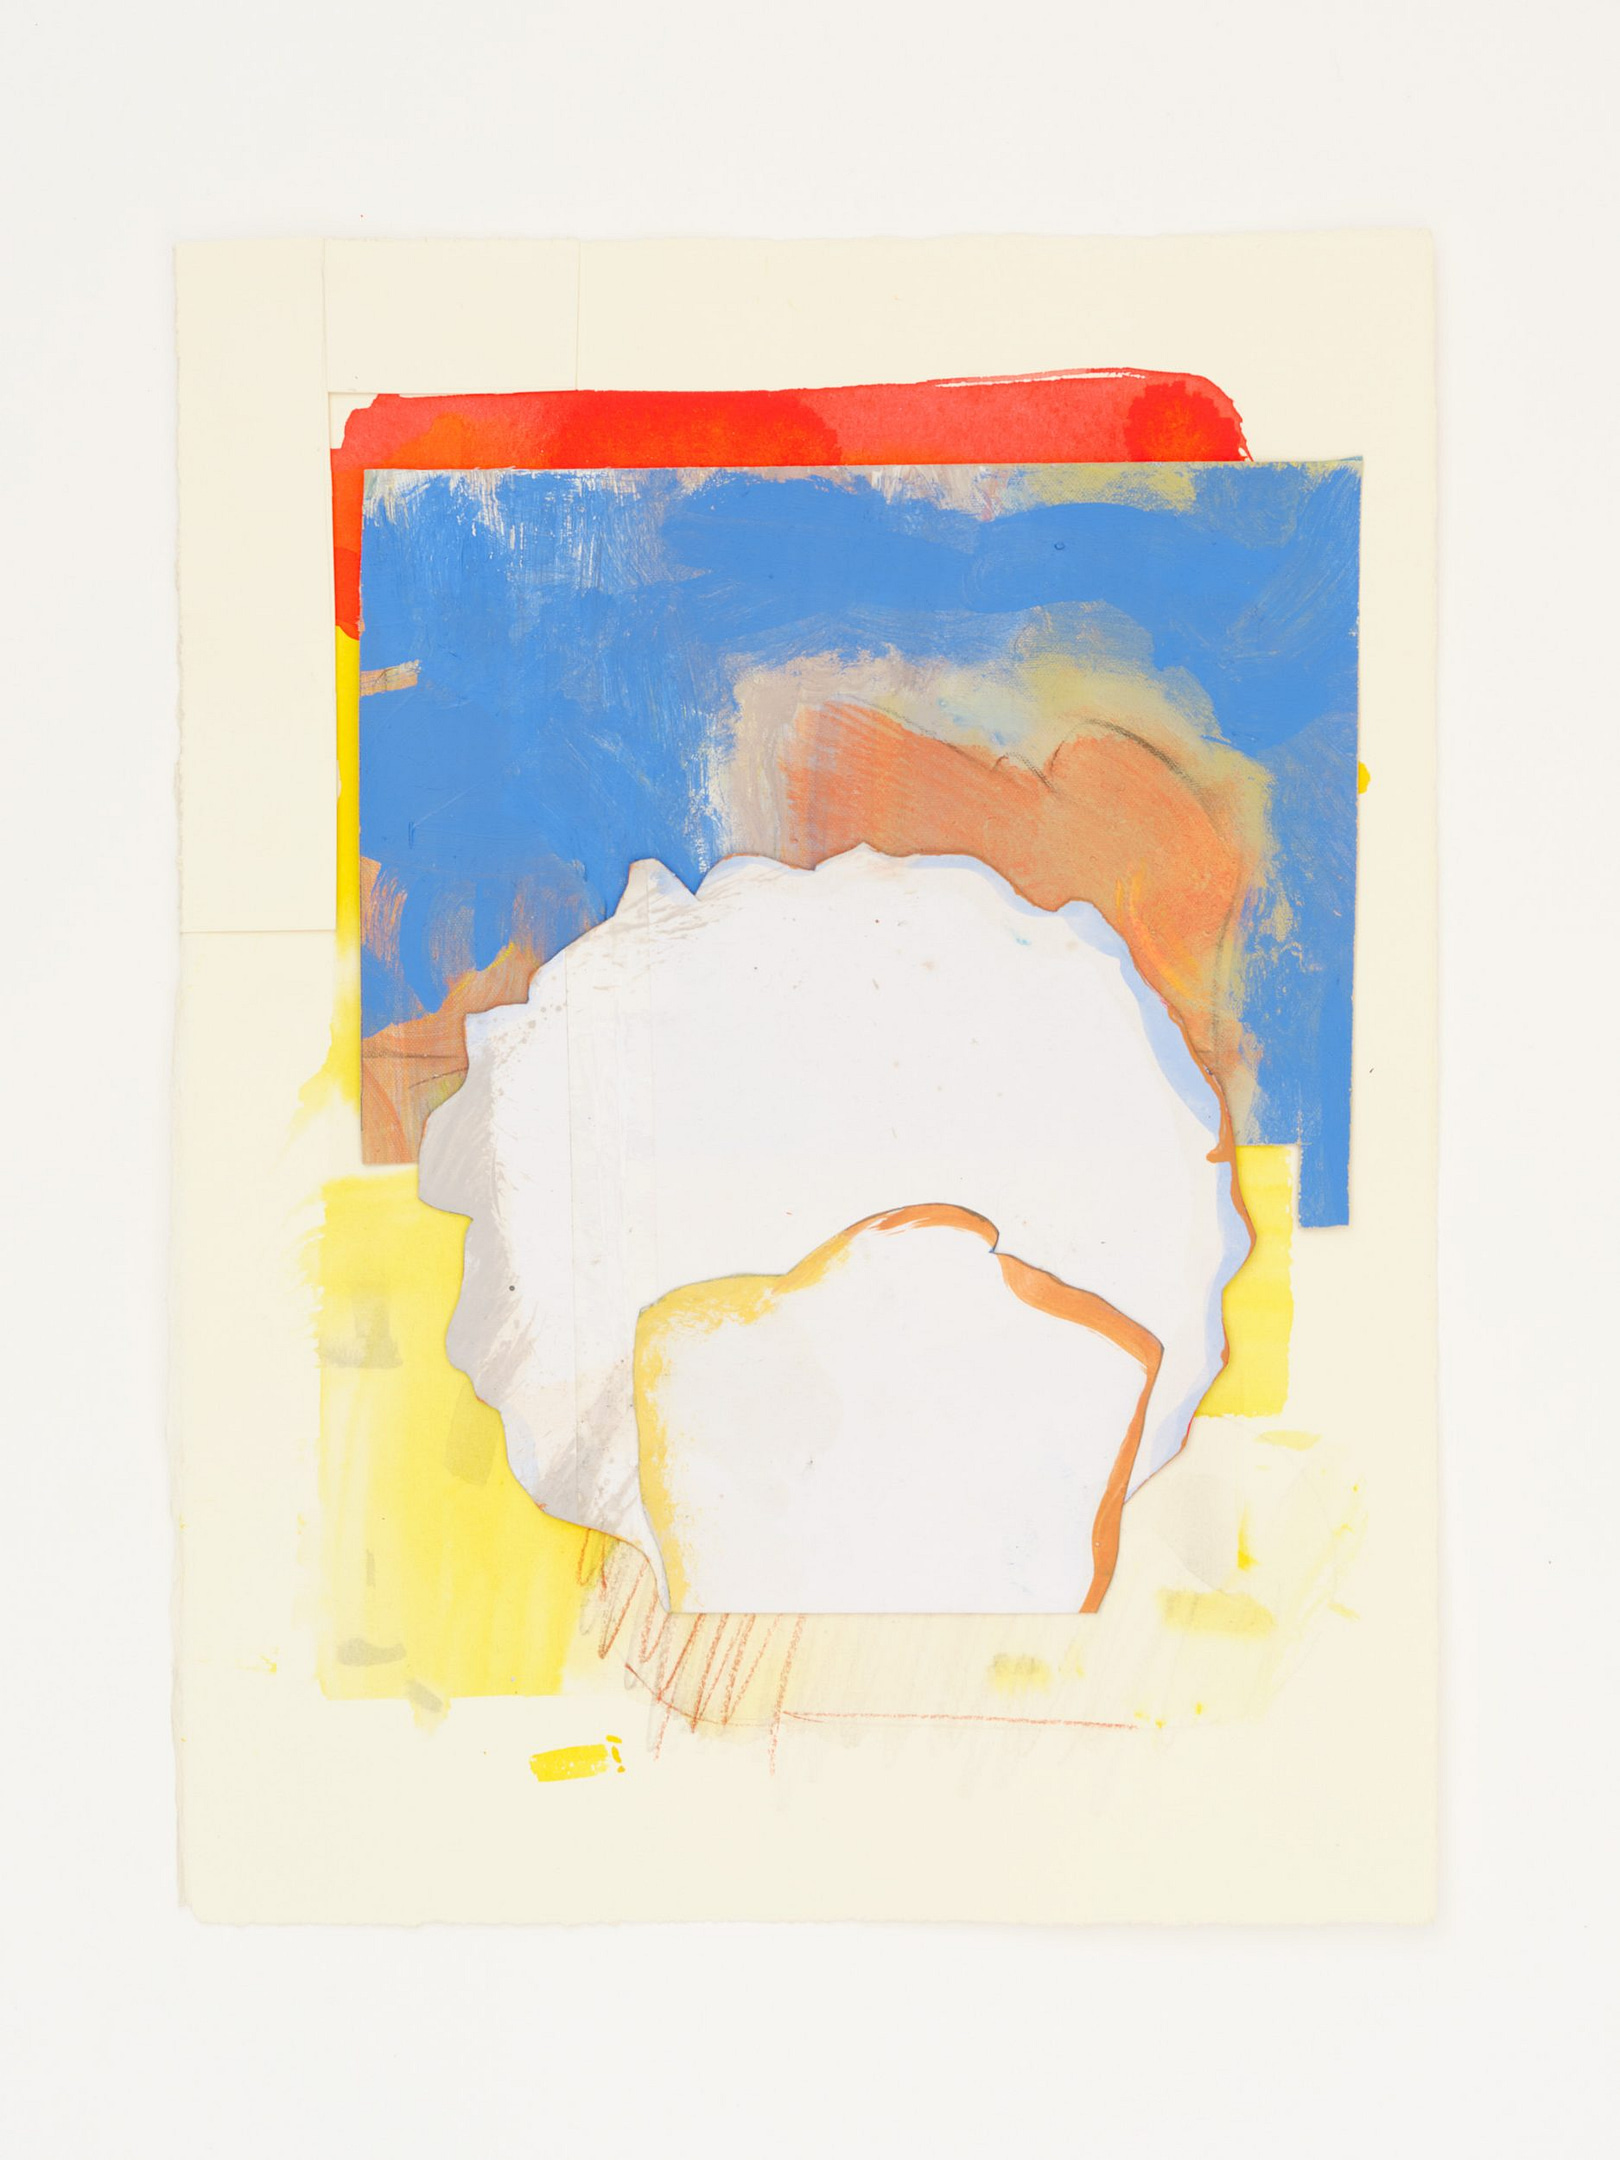 Daniel Pettitt_Crop Rotation (Summer), 2020, ink, chalk, collage on paper, 38 x28cm